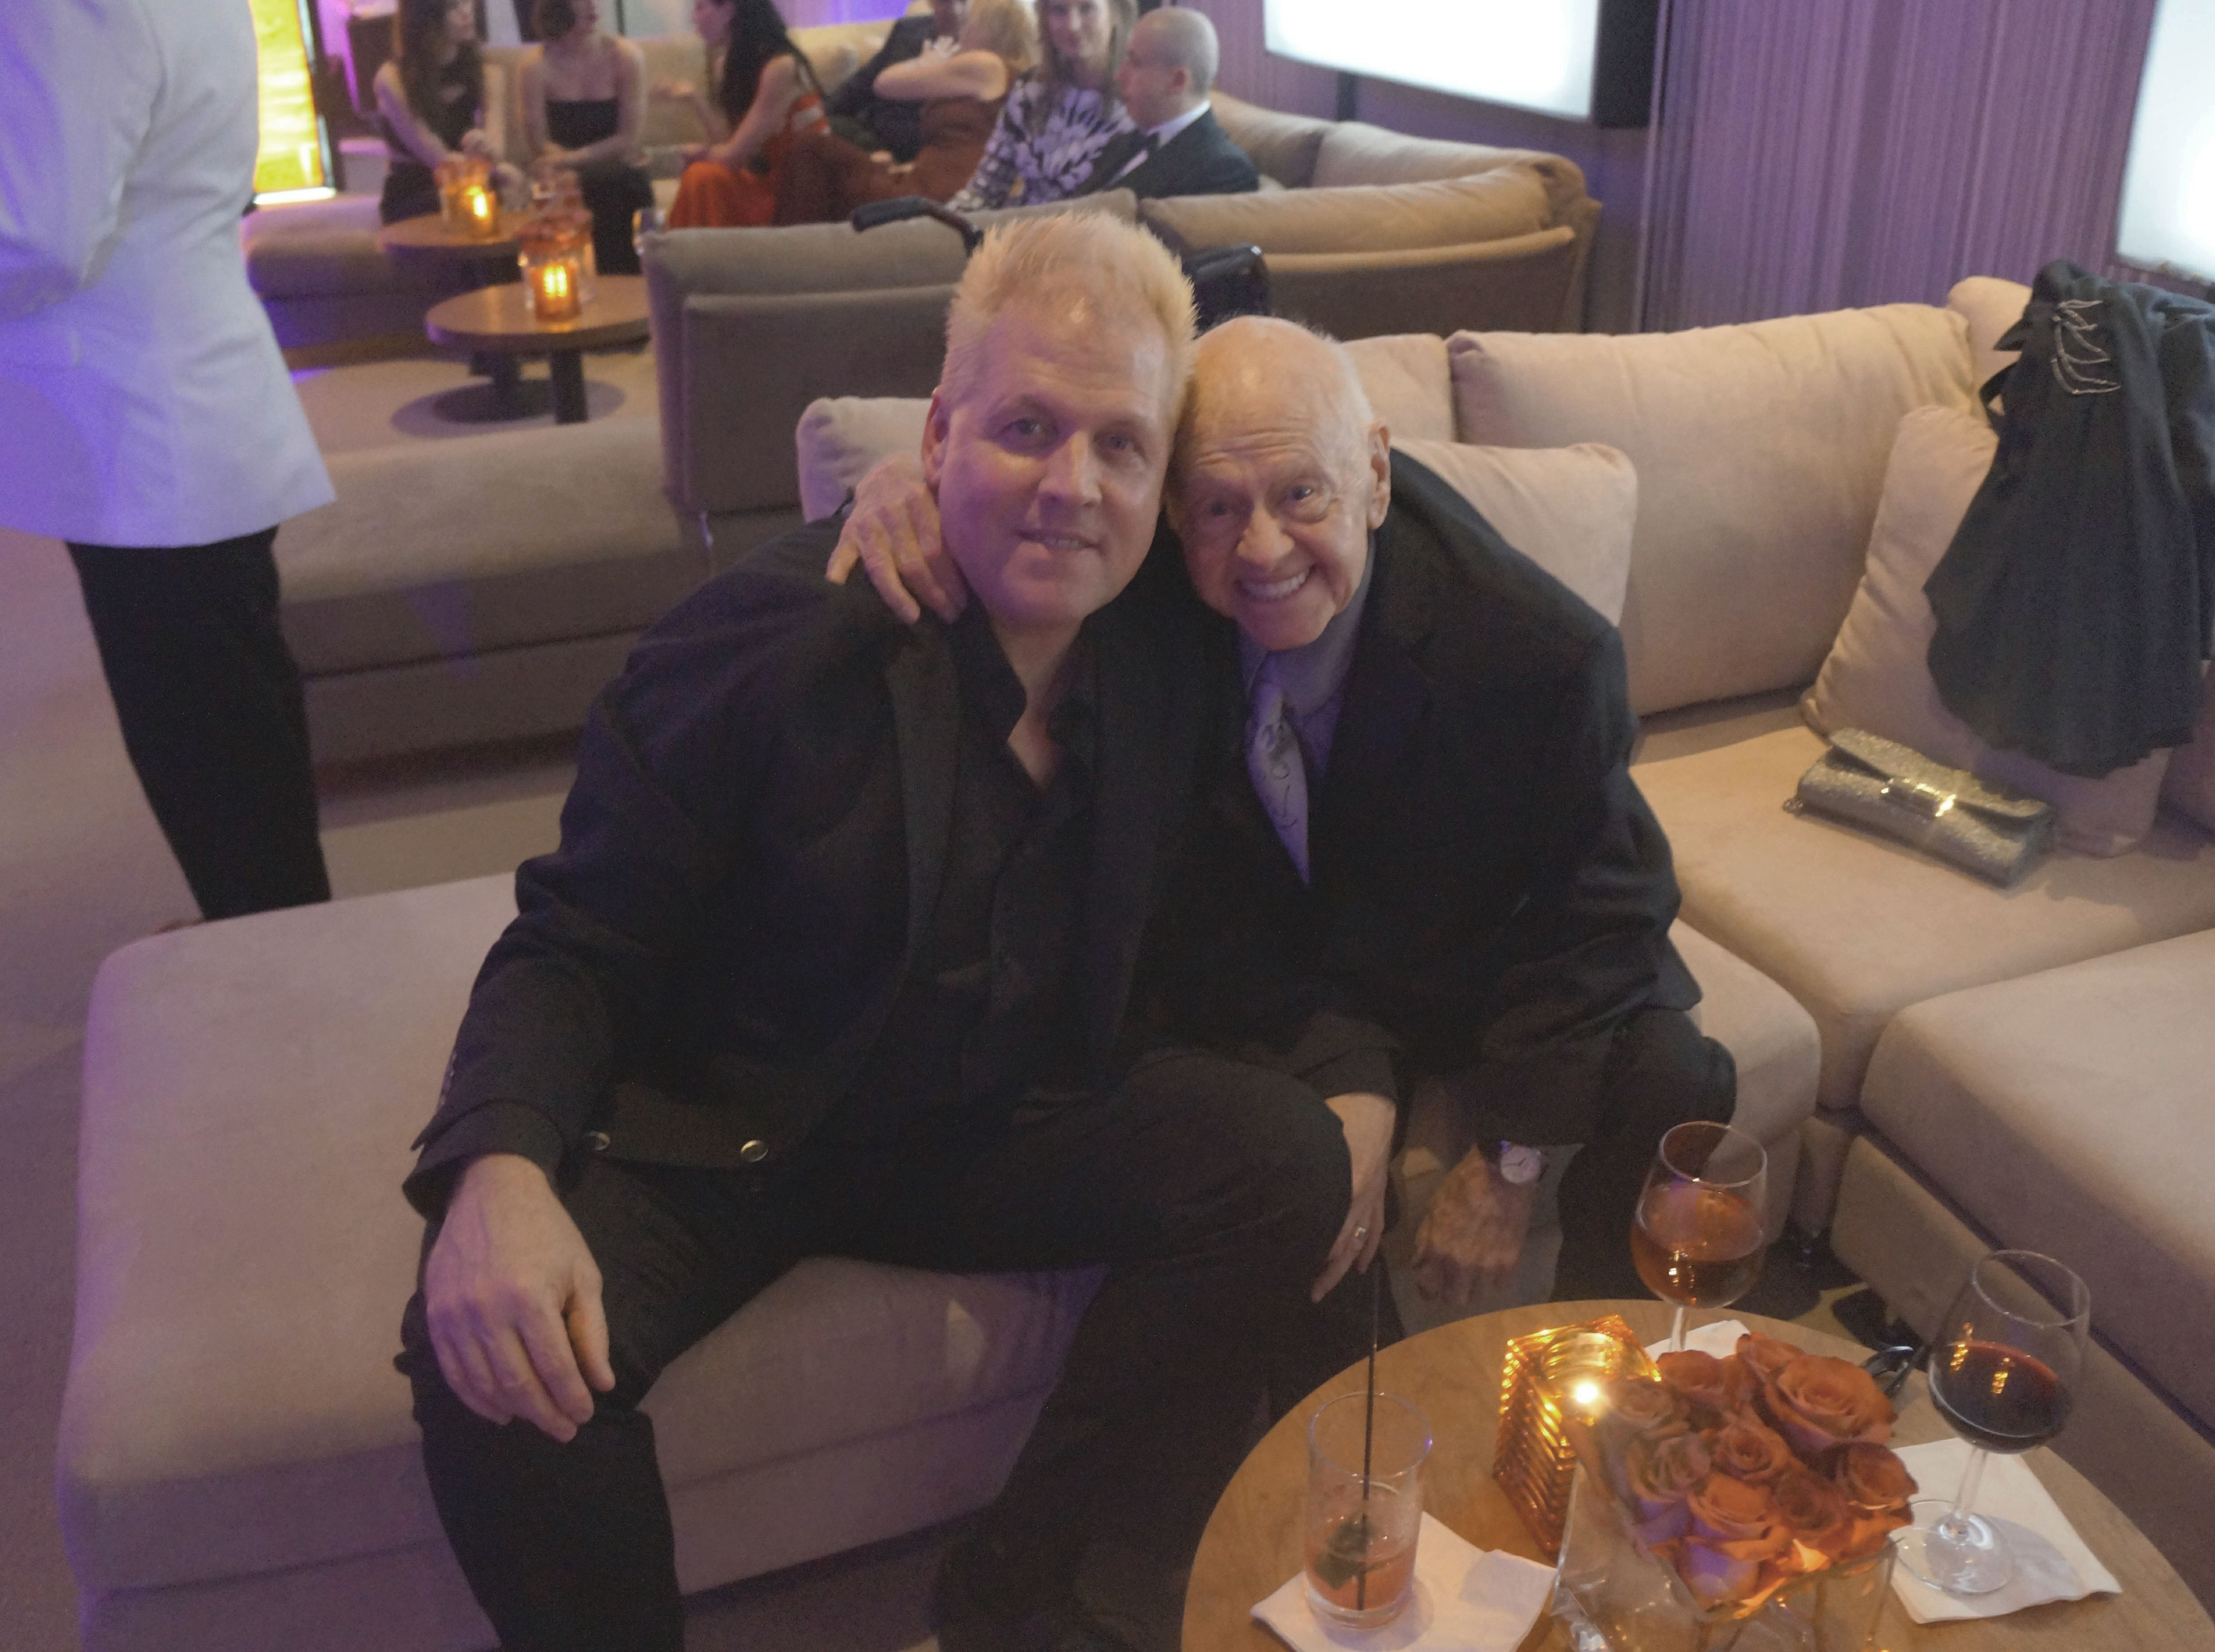 Mickey and Mark Rooney at the 2014 Vanity Fair Oscar party.